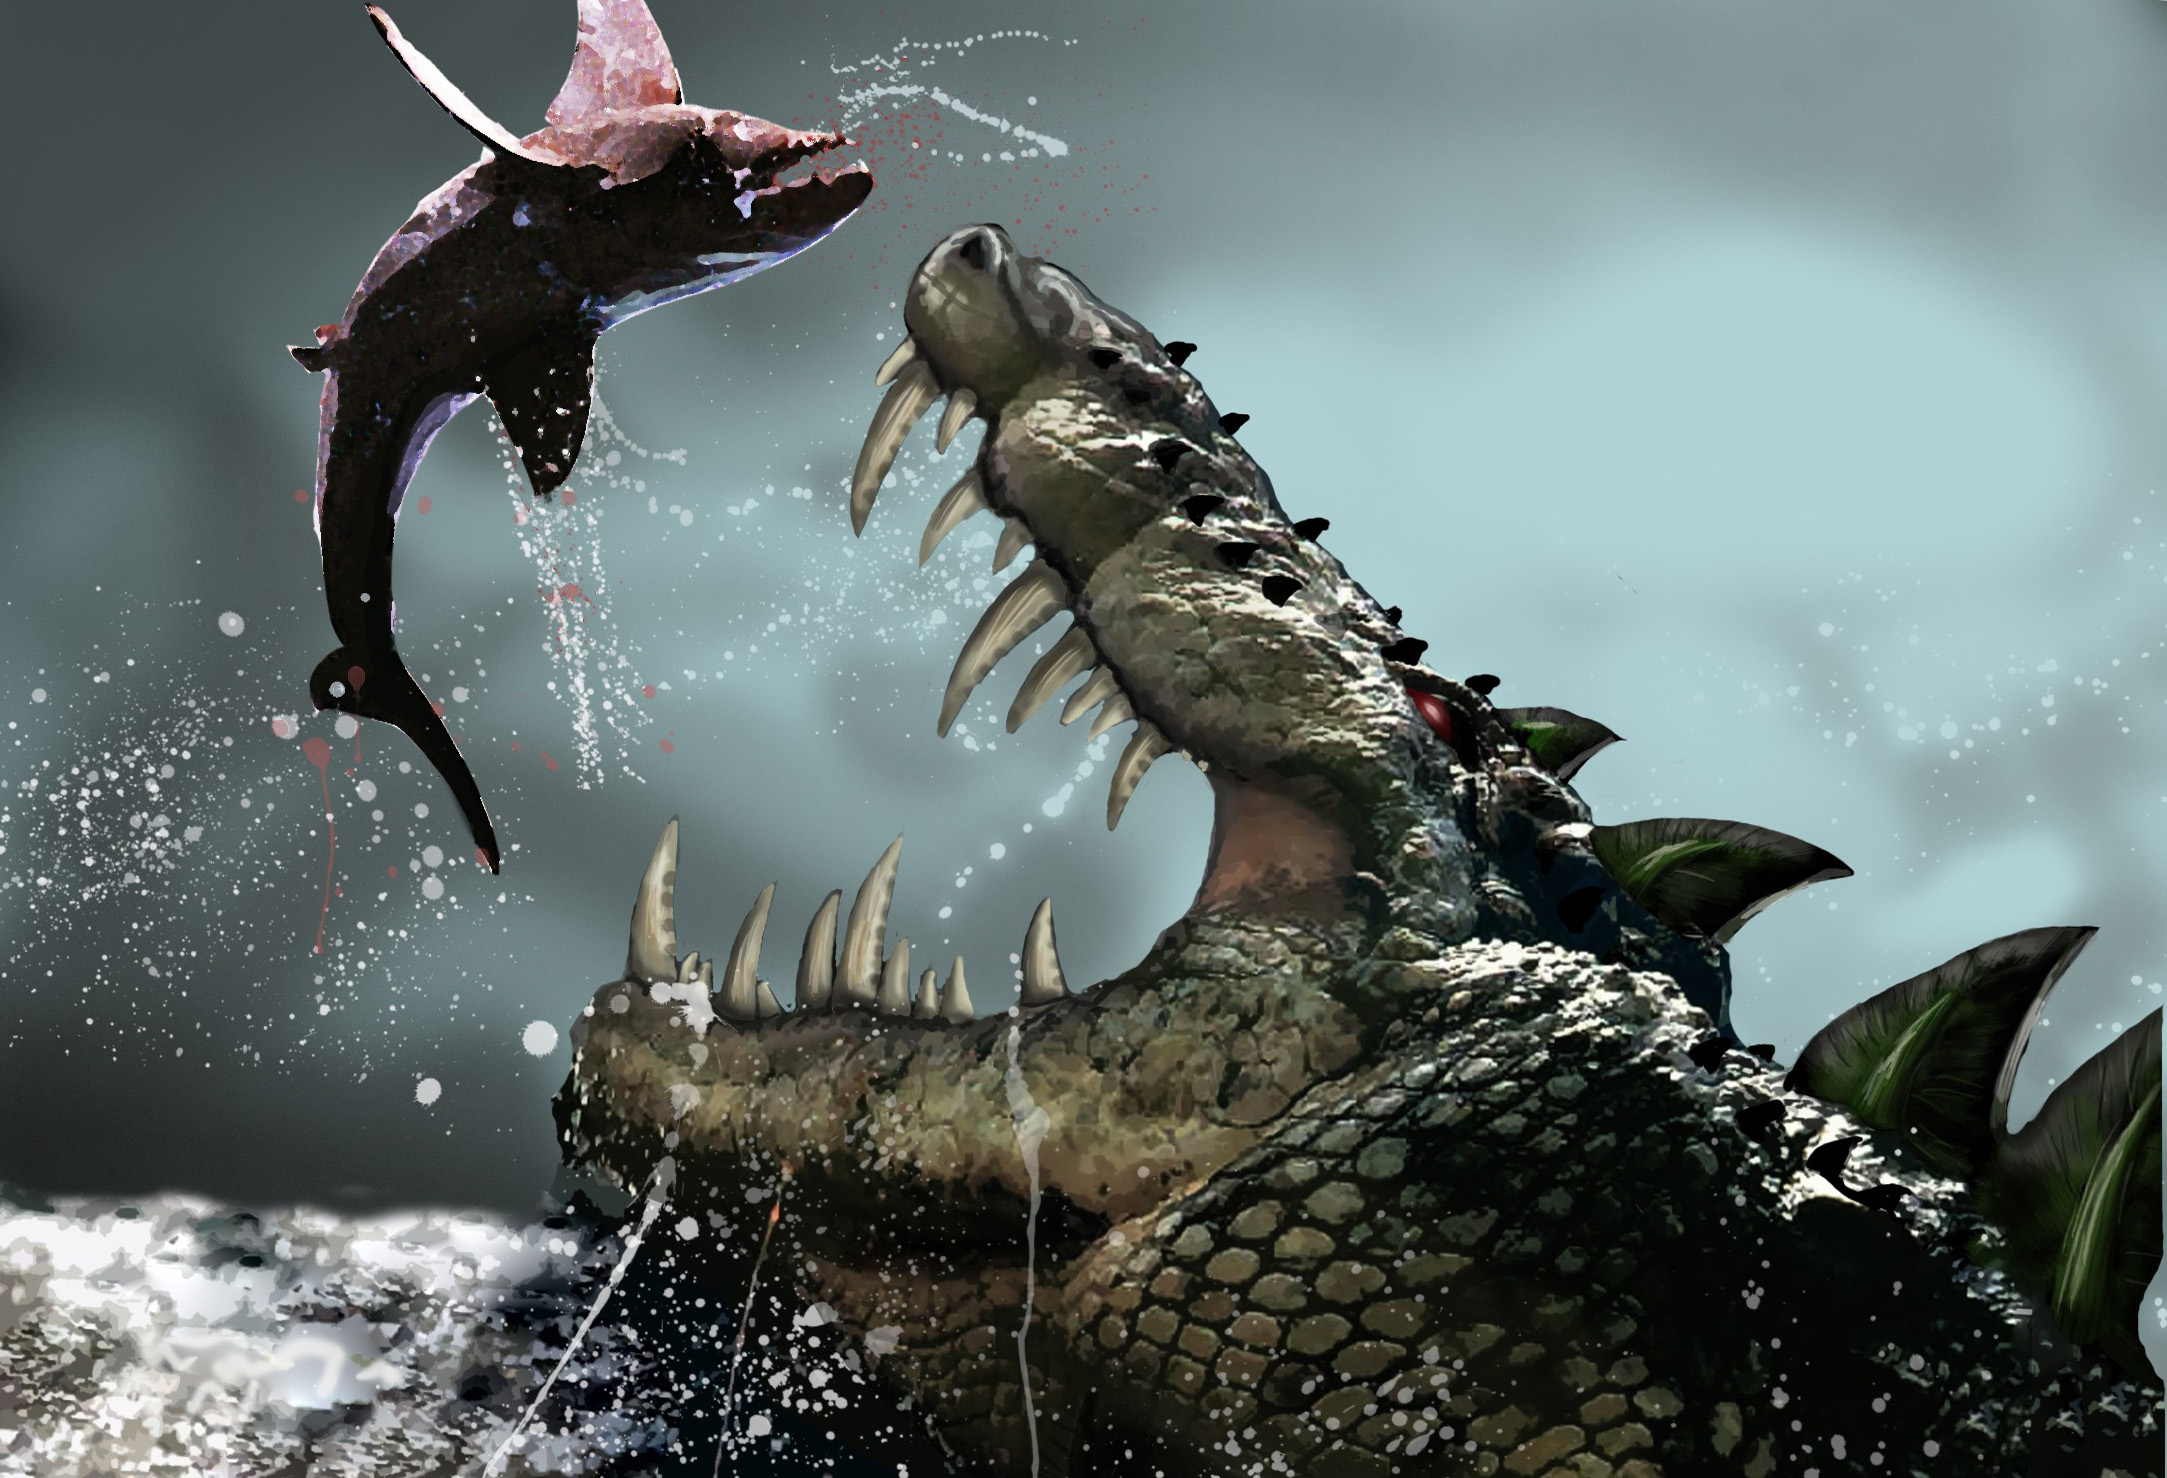 Fantasy art creatures alligator huge fish wallpapers hd desktop and mobile backgrounds